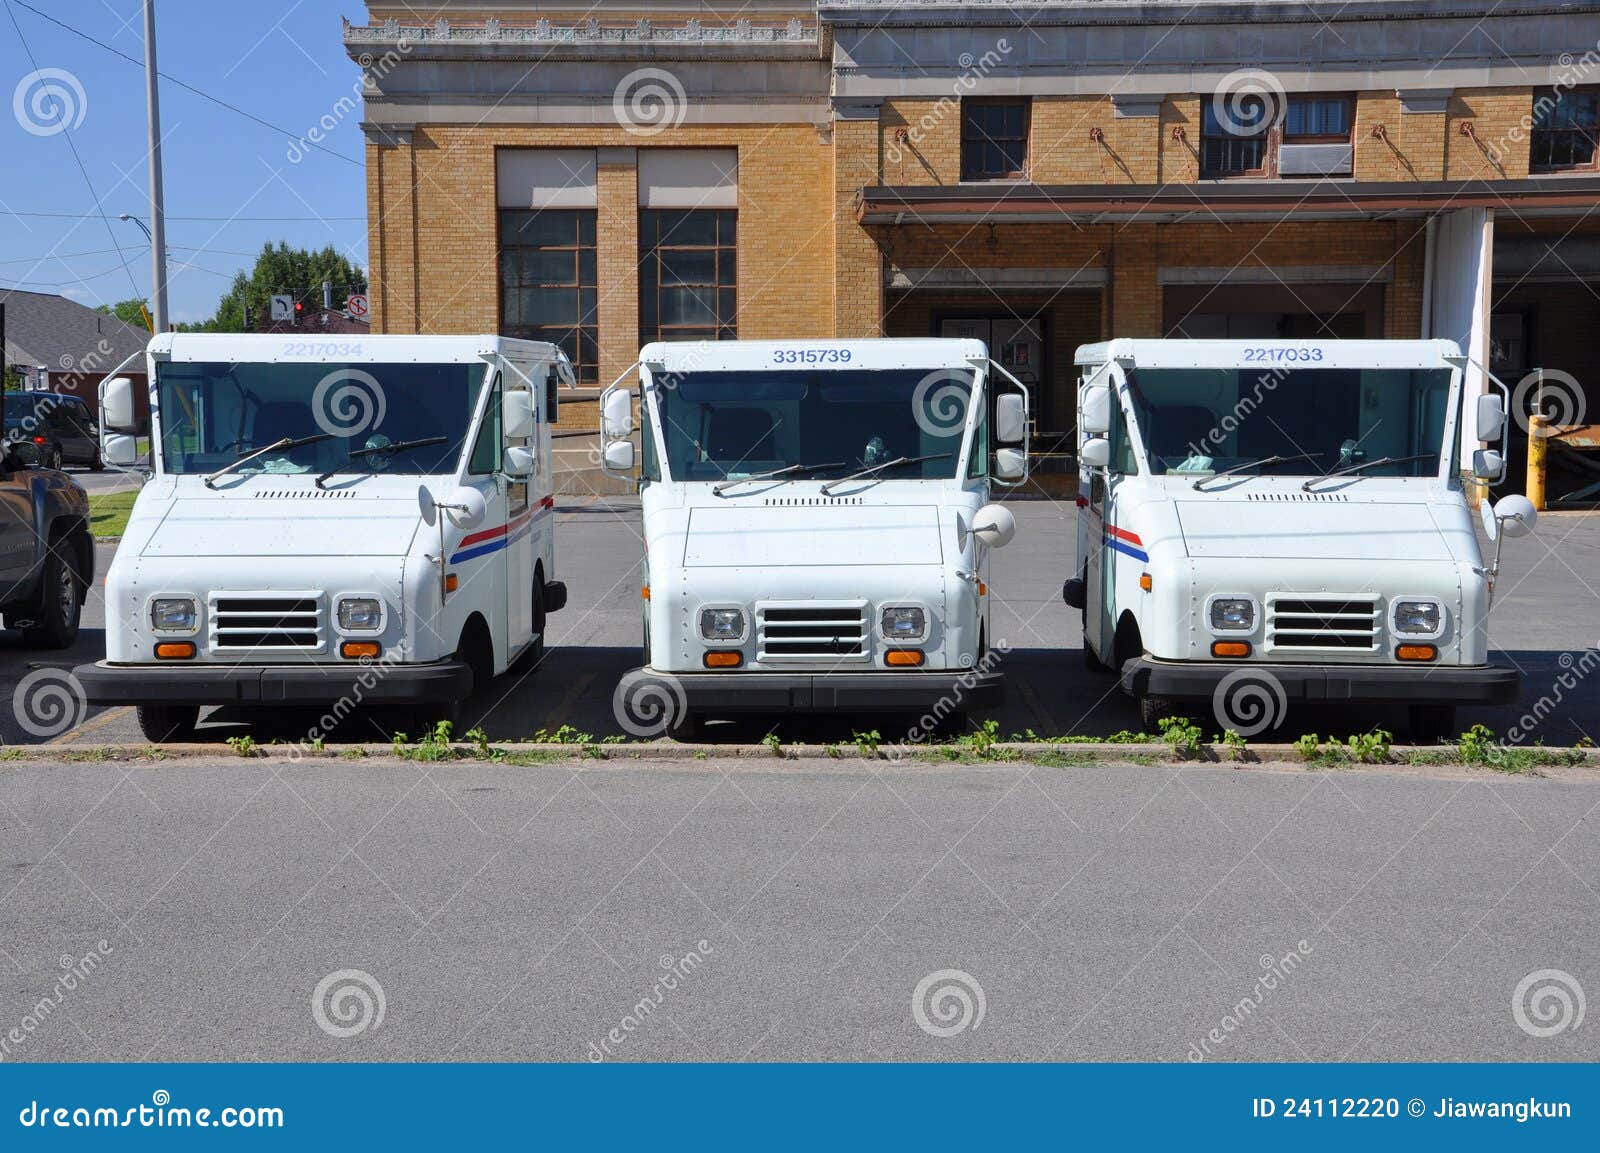 USPS Postal Vehicle Editorial Image - Image: 24112220